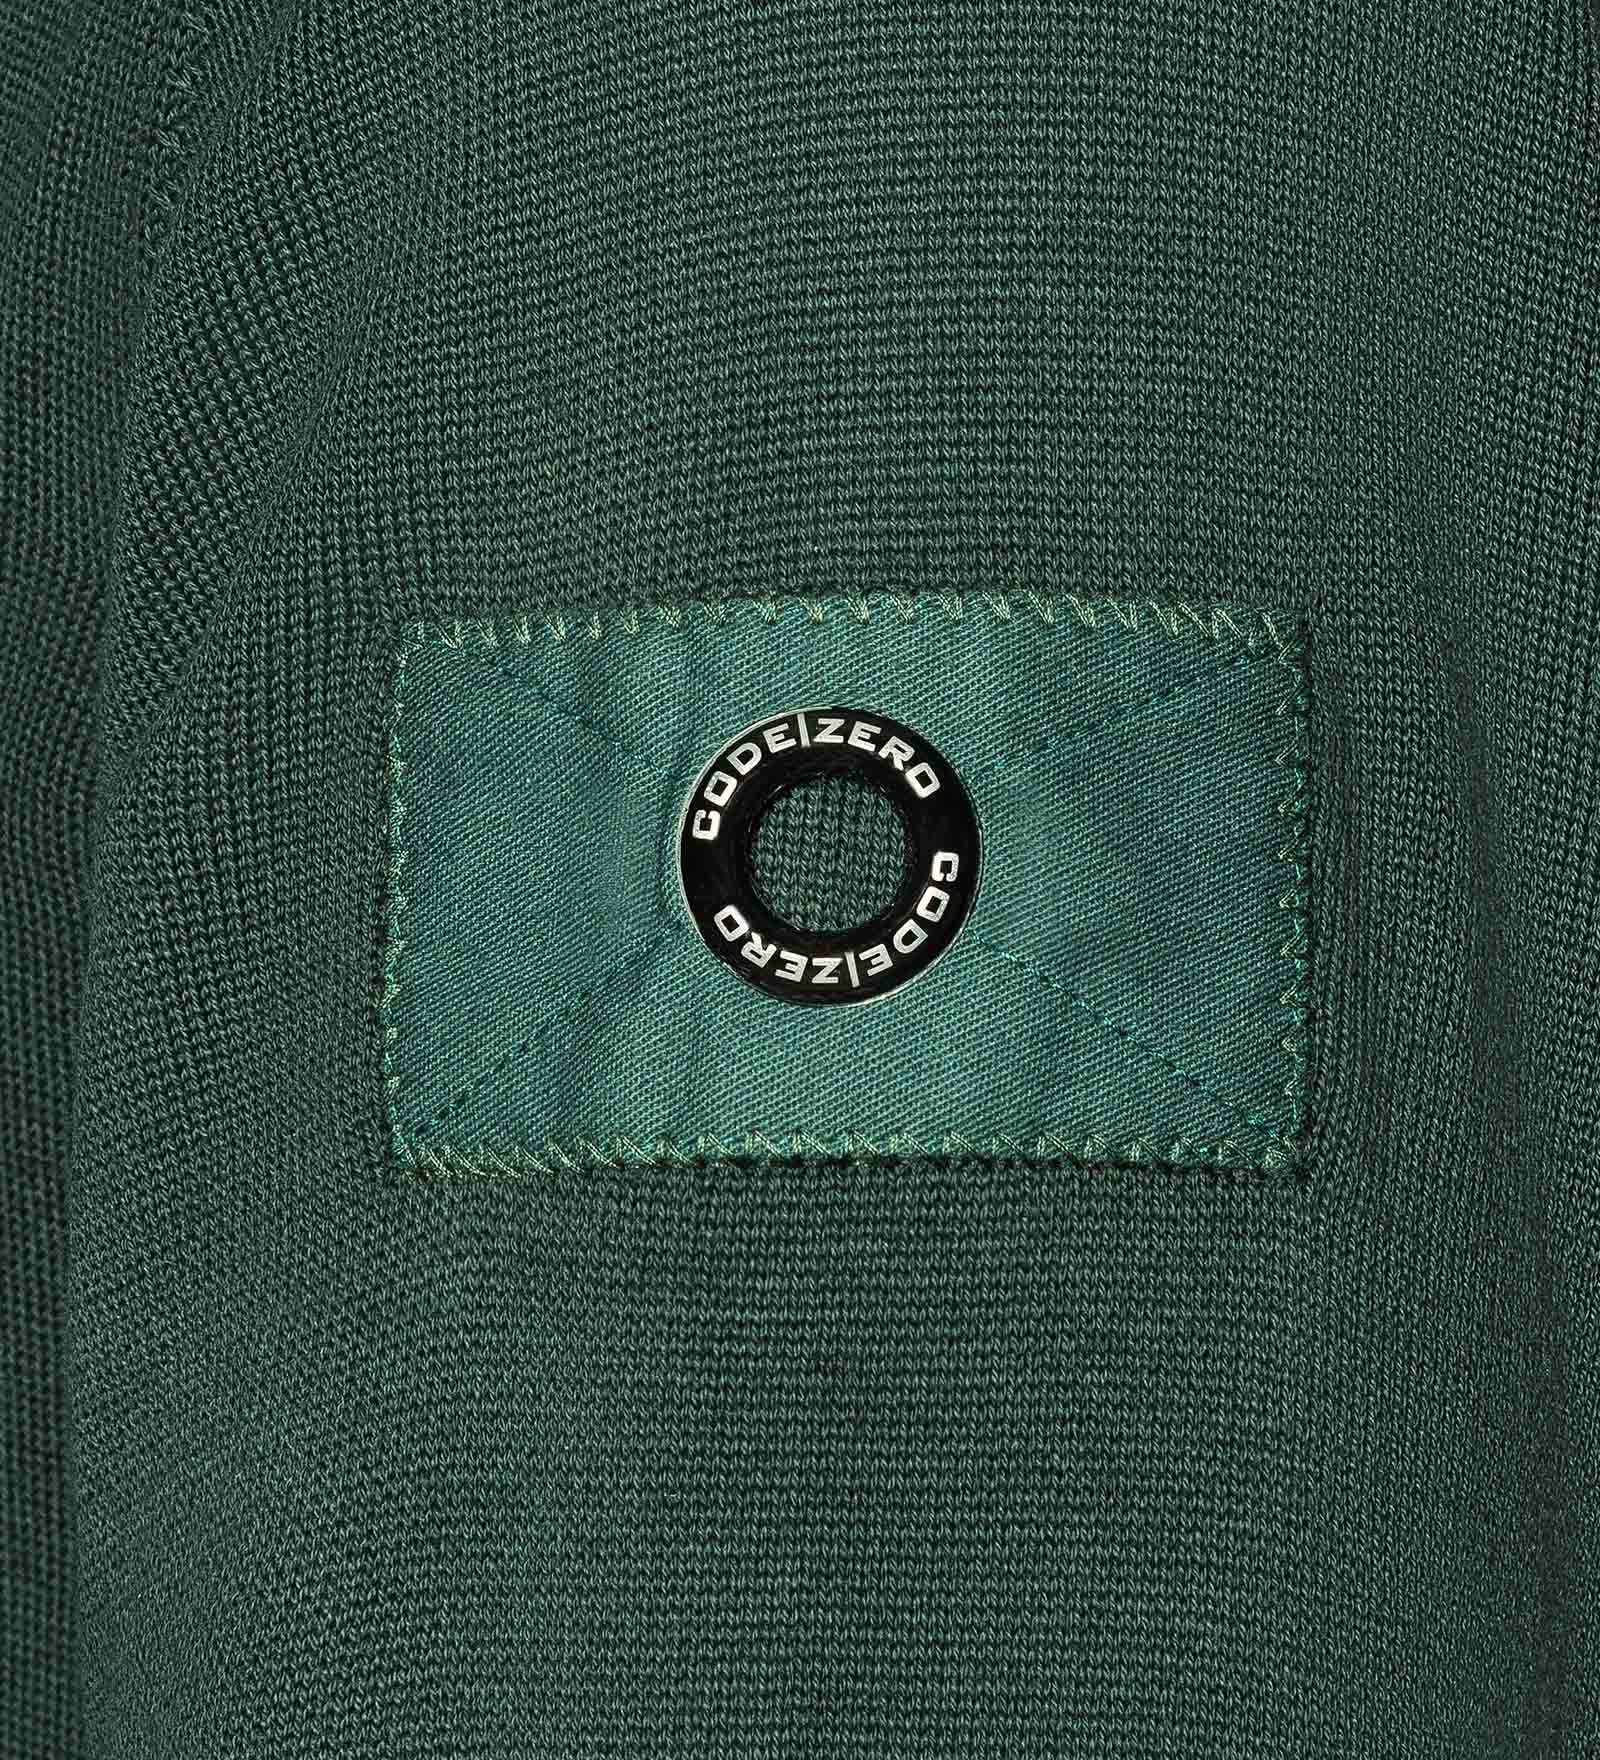 Details of a green jumper